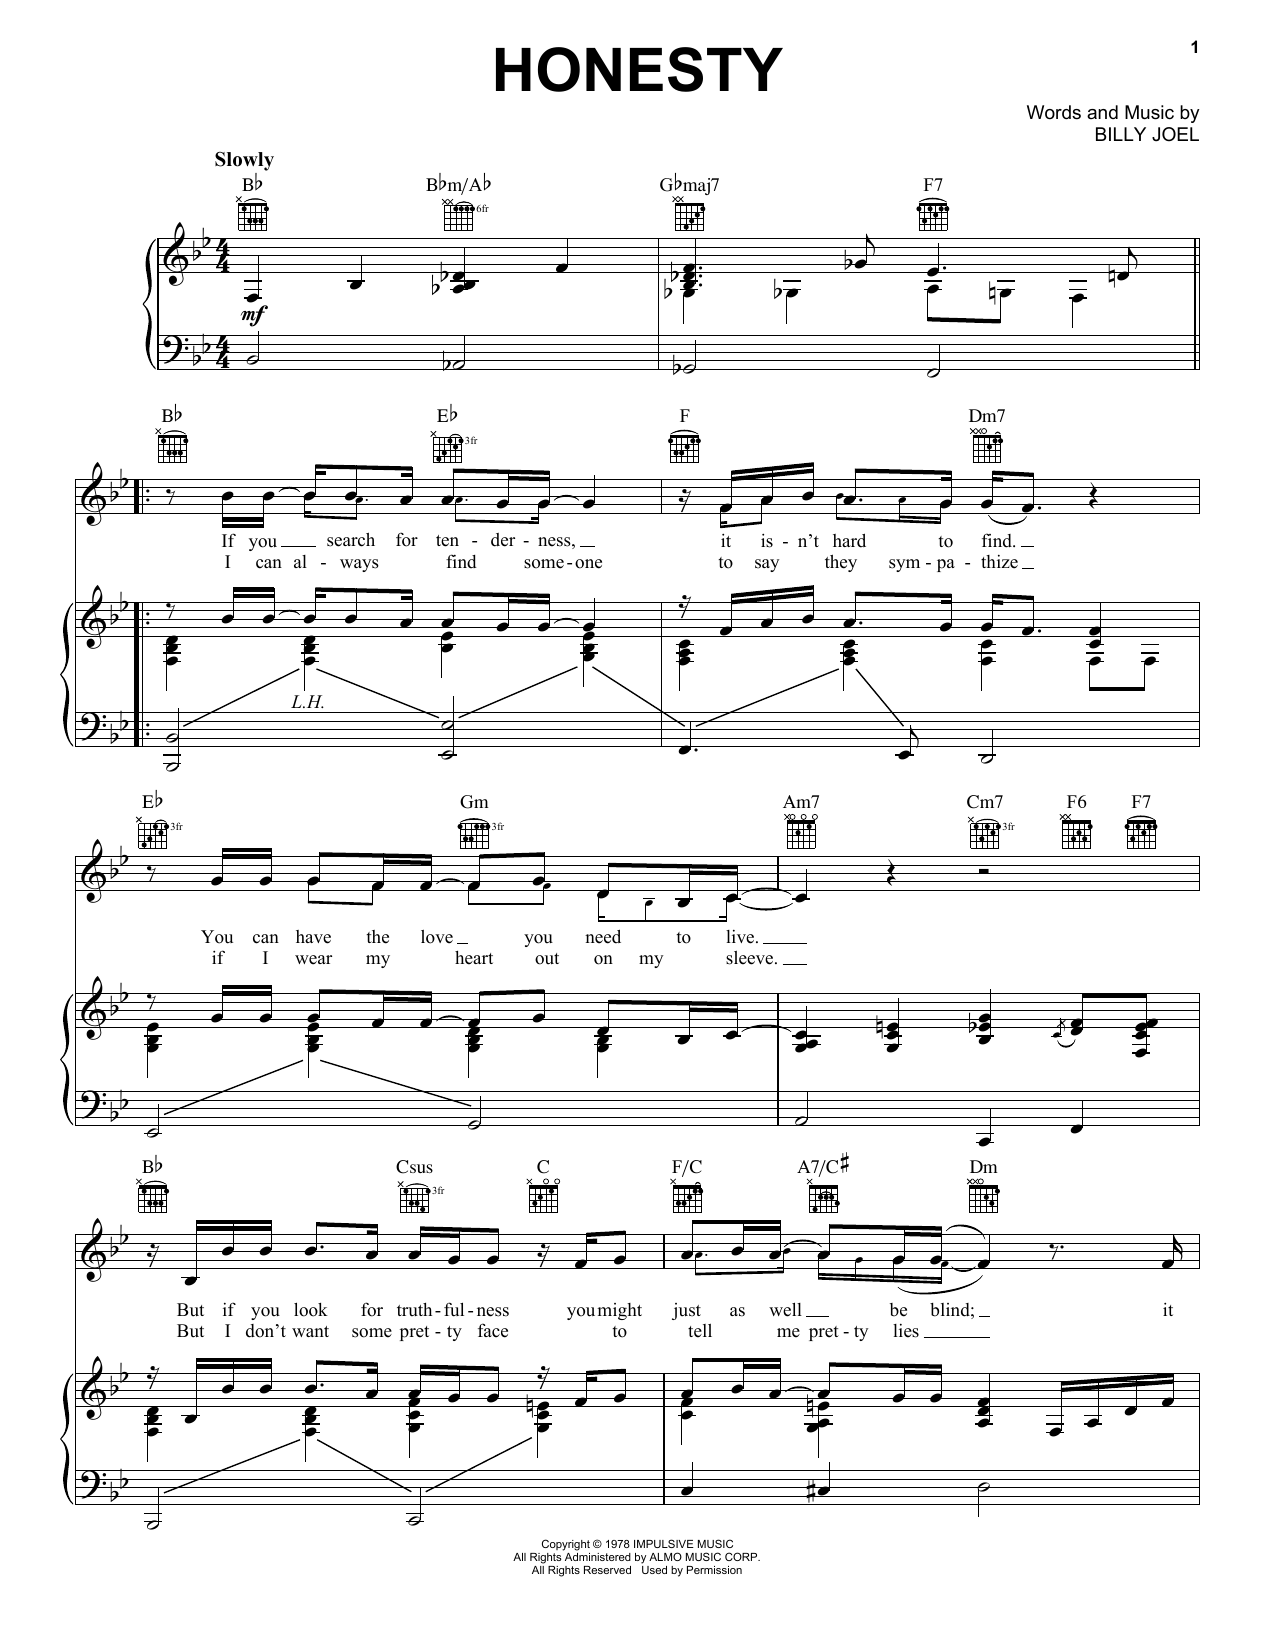 Billy Joel Honesty Sheet Music Notes & Chords for Melody Line, Lyrics & Chords - Download or Print PDF